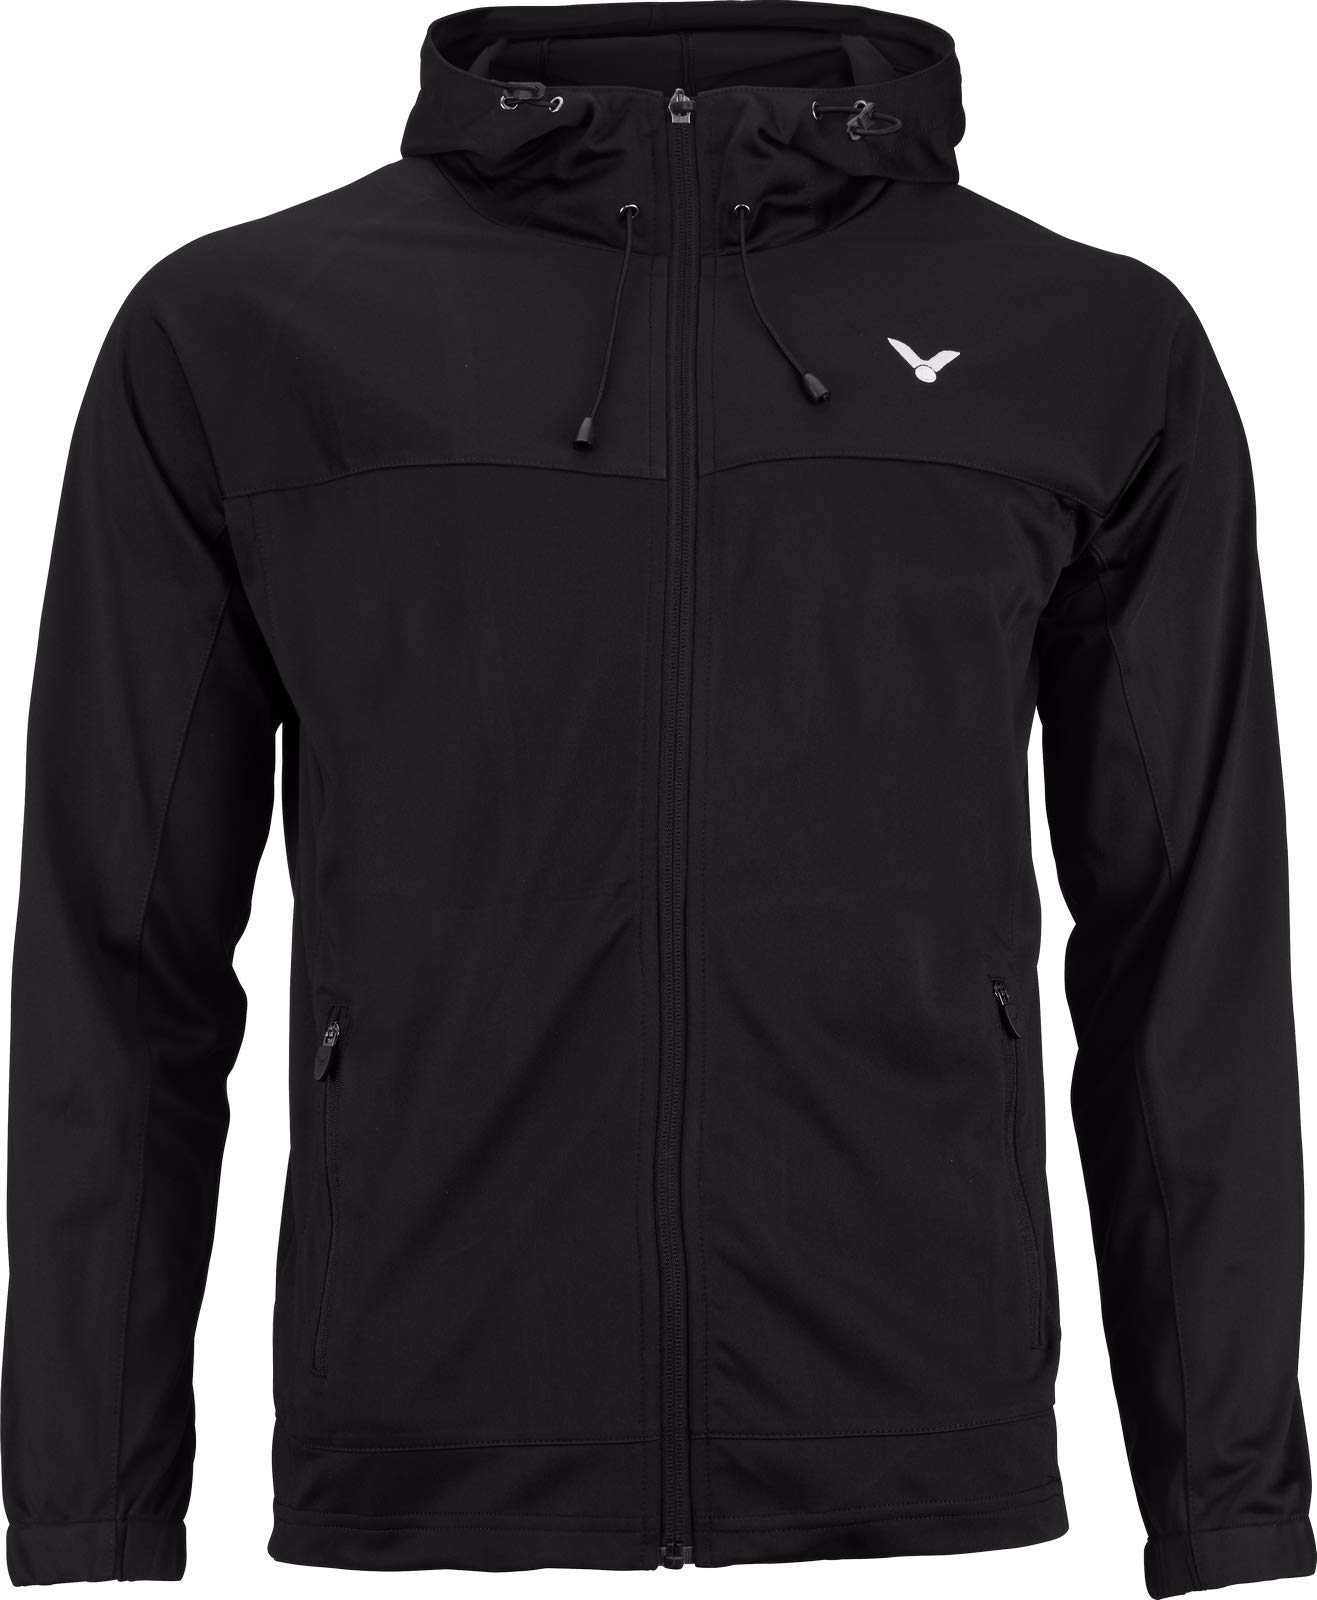 Victor TA Jacket Team Badmintonshirt, Black, S